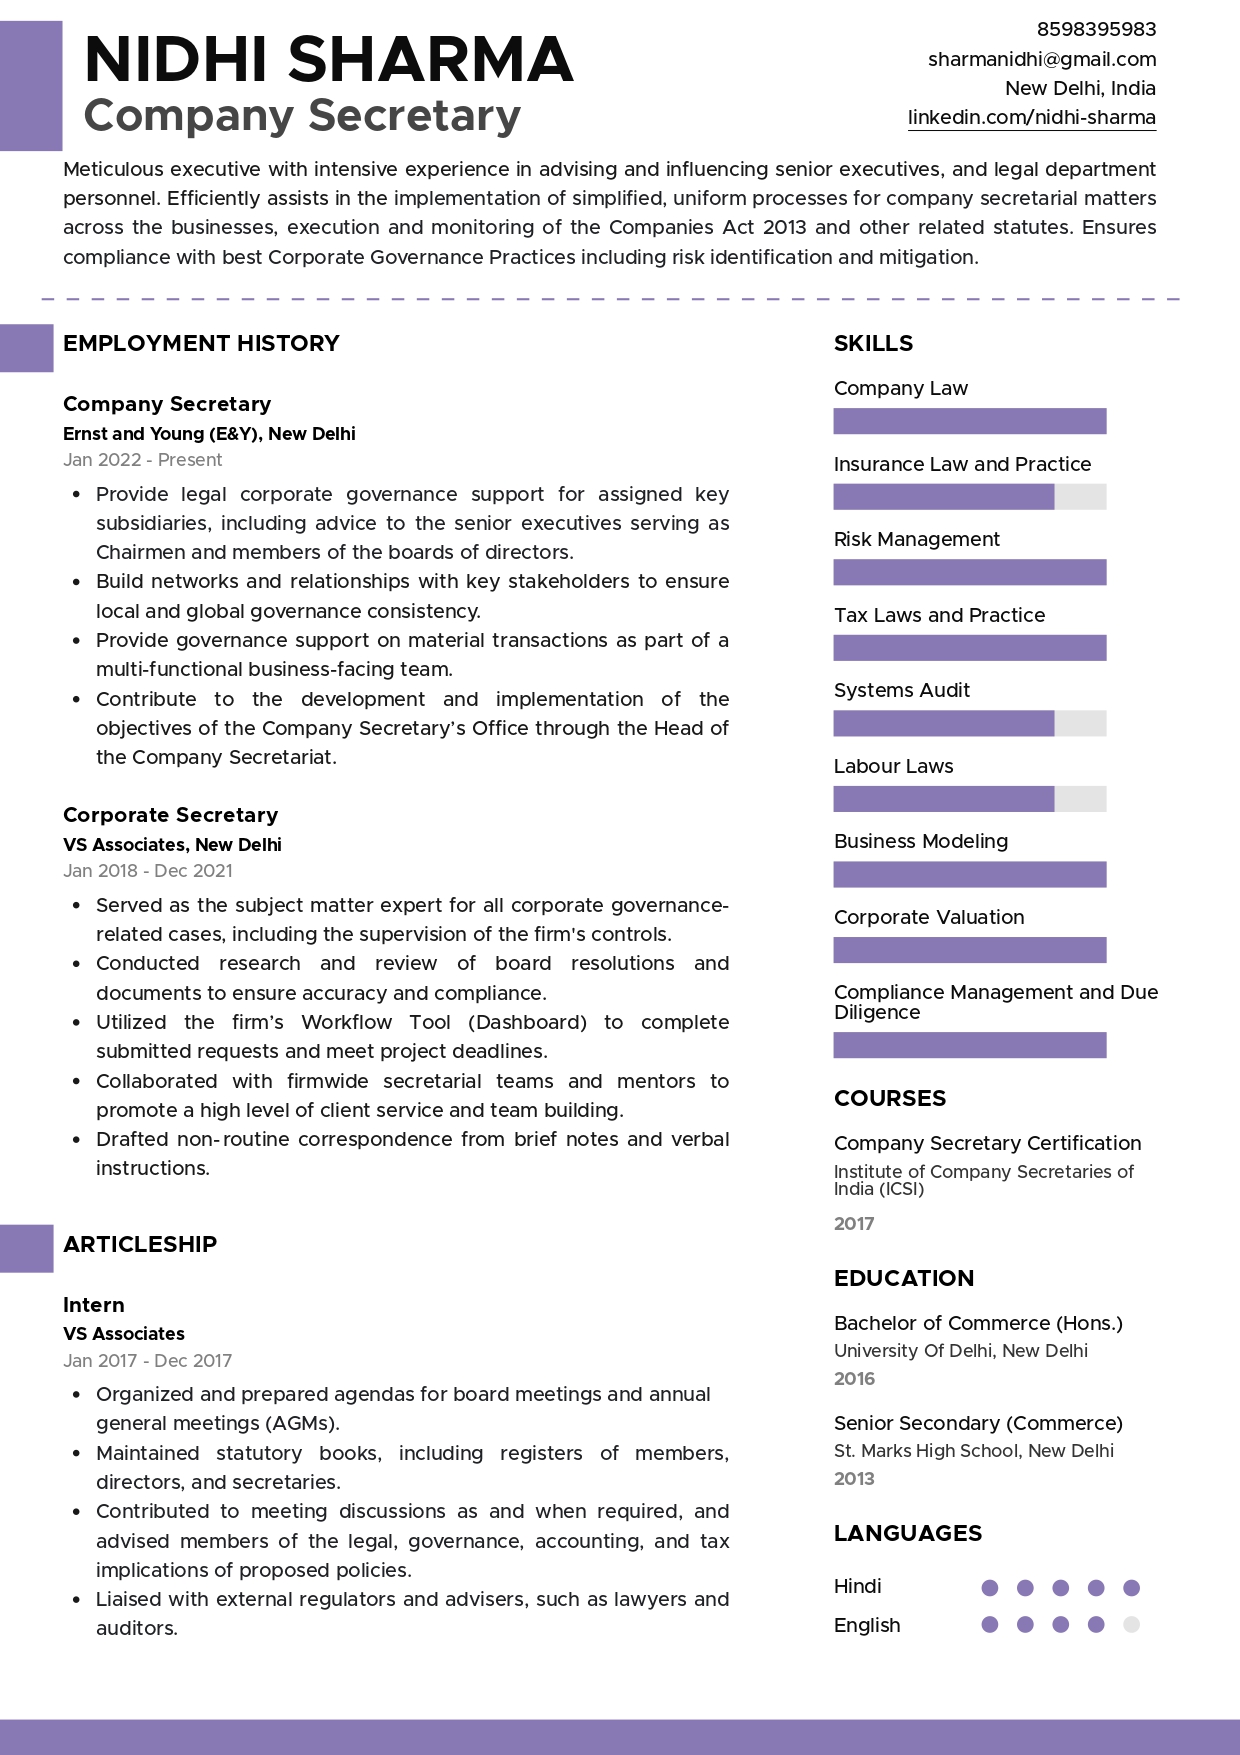 Sample Resume of Company Secretary (CS) | Free Resume Templates & Samples on Resumod.co